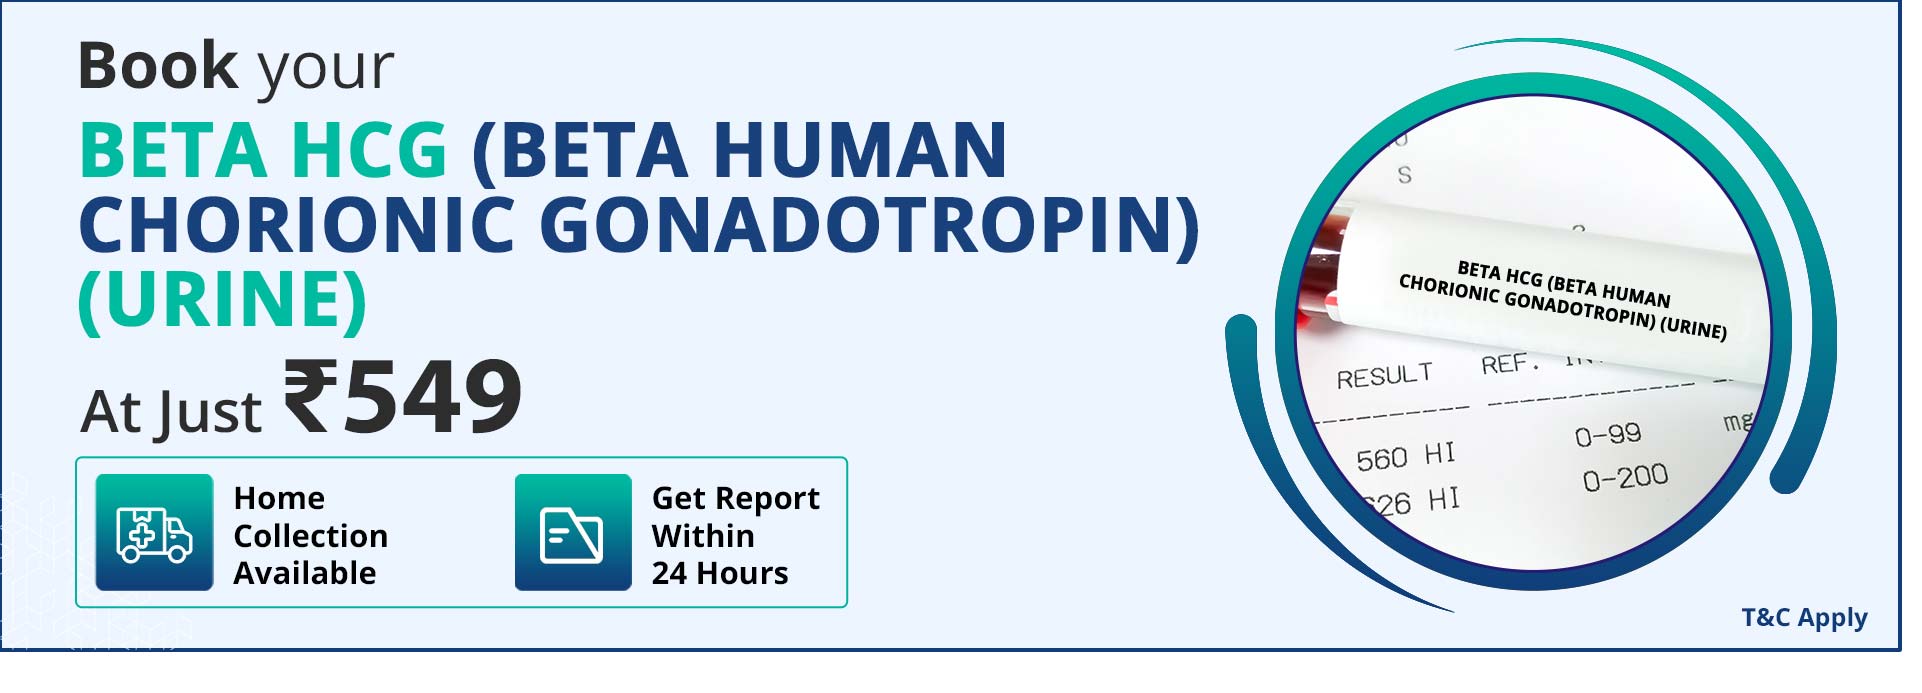 Beta HCG (Beta Human Chorionic Gonadotropin) (Urine)